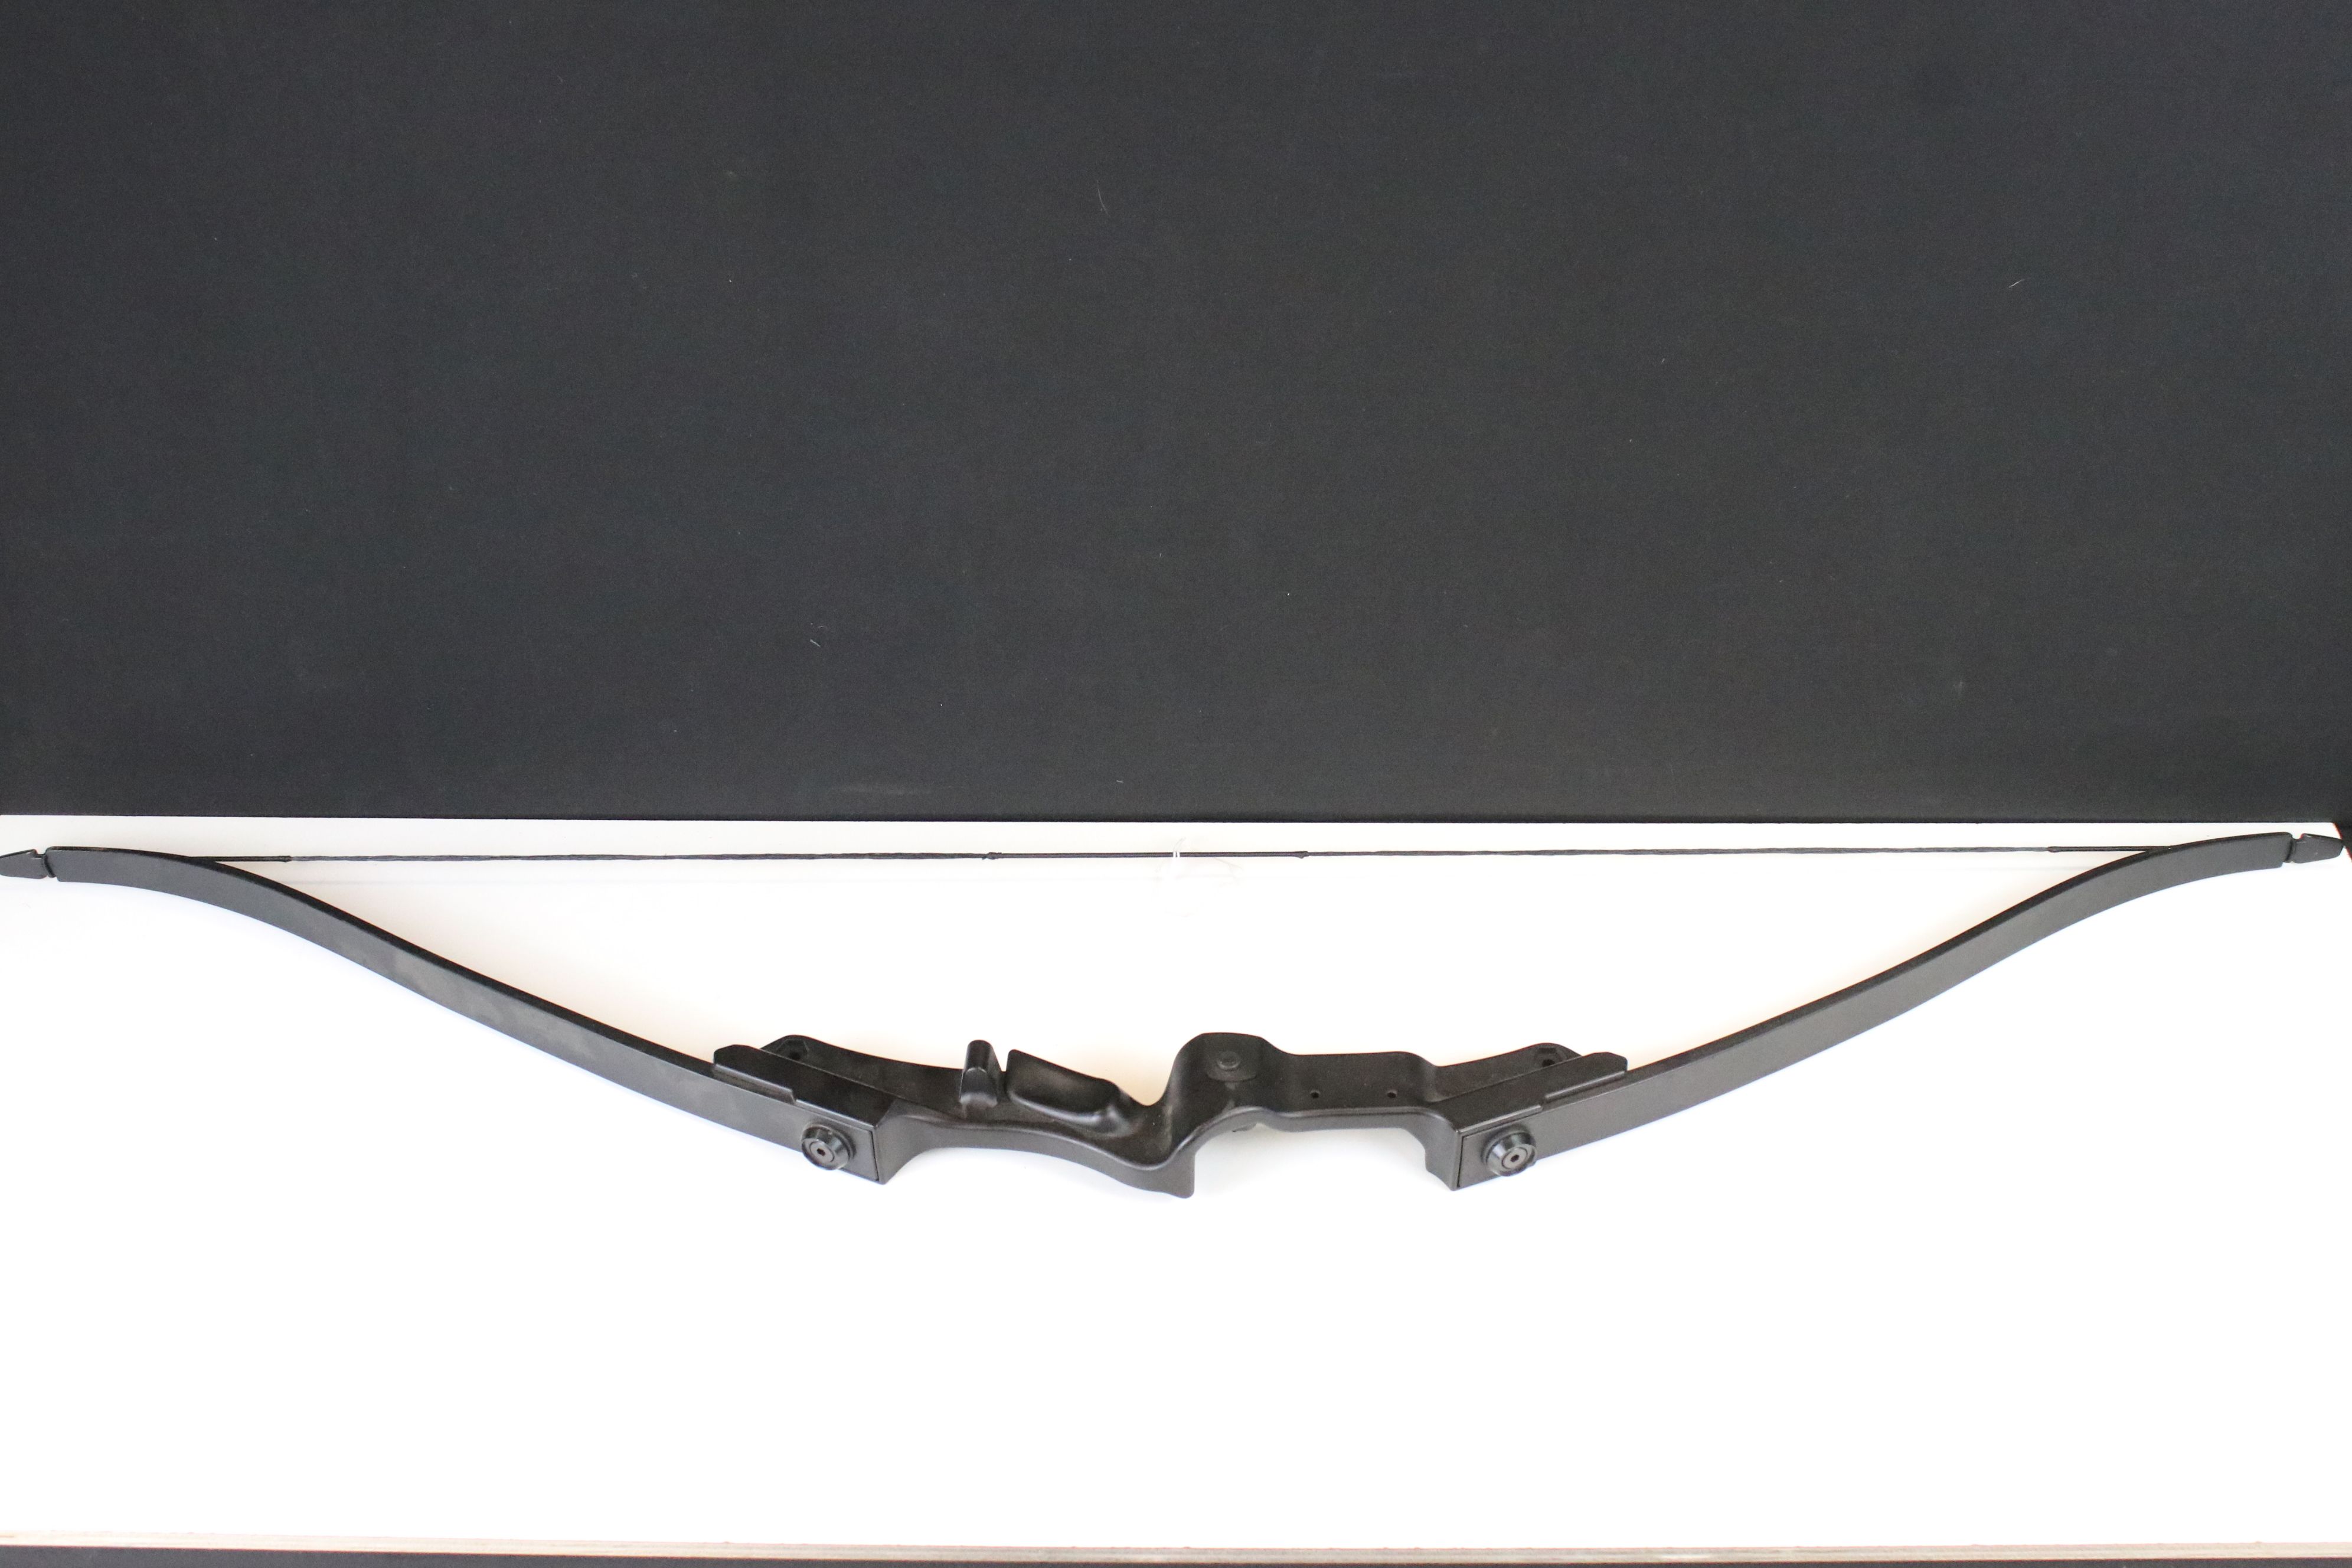 A Contemporary Petron Archery Bow.